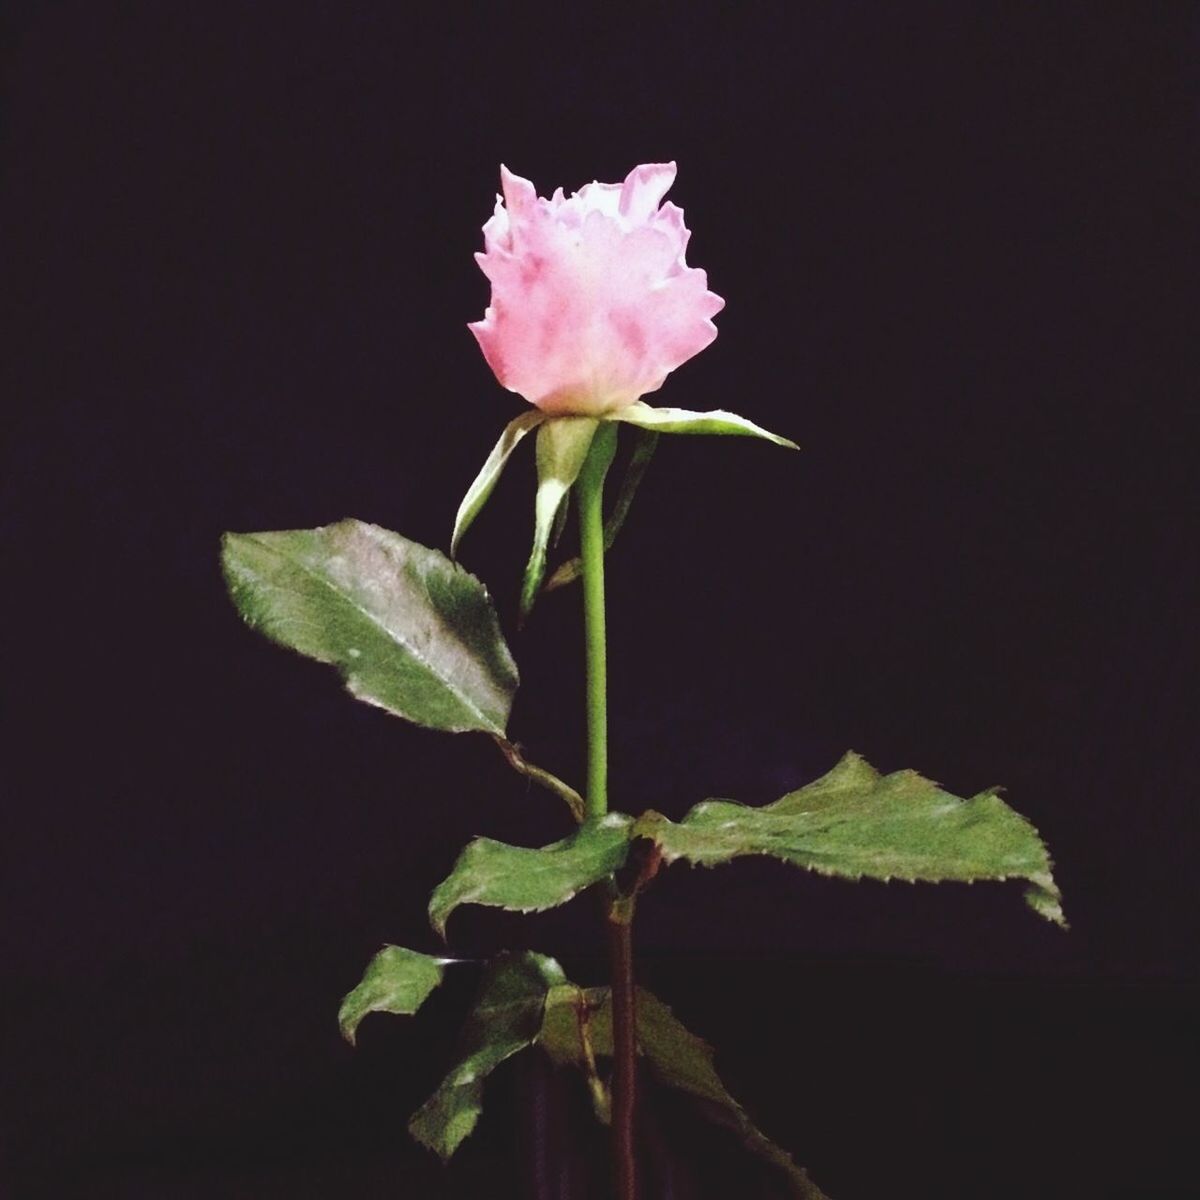 Pink rose blooming against black background